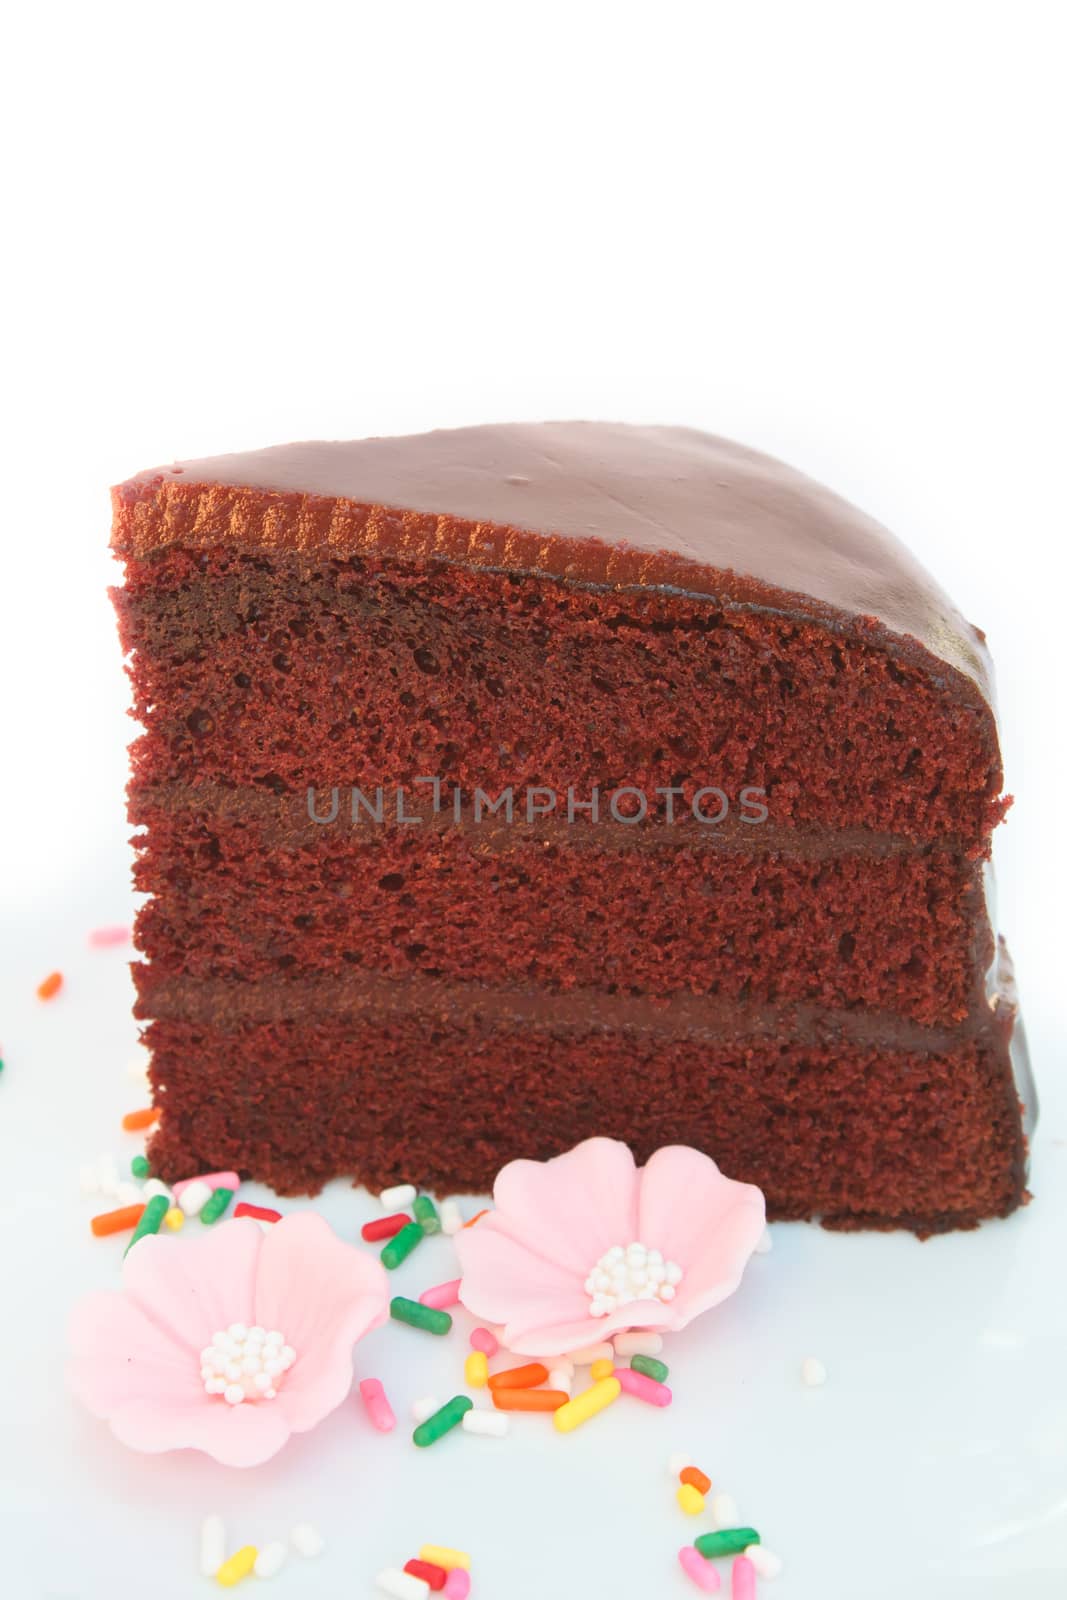 Chocolate cake with fudge sauce. by Tachjang